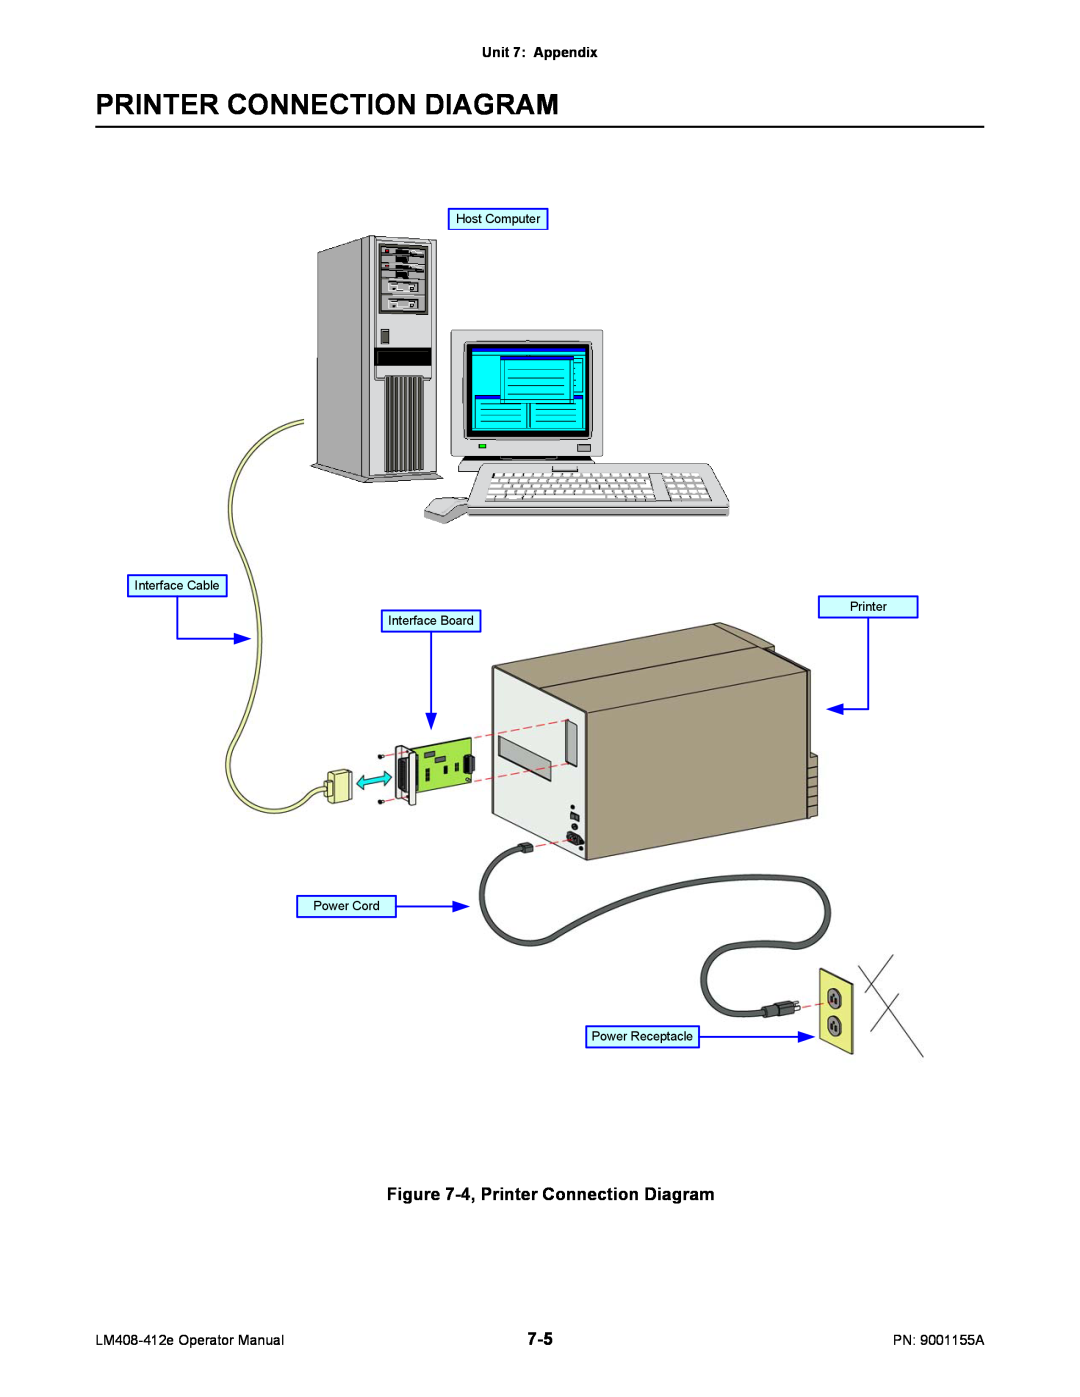 SATO LM408/412E manual Printer Connection Diagram, Unit 7 Appendix, Host Computer, Interface Cable Interface Board 